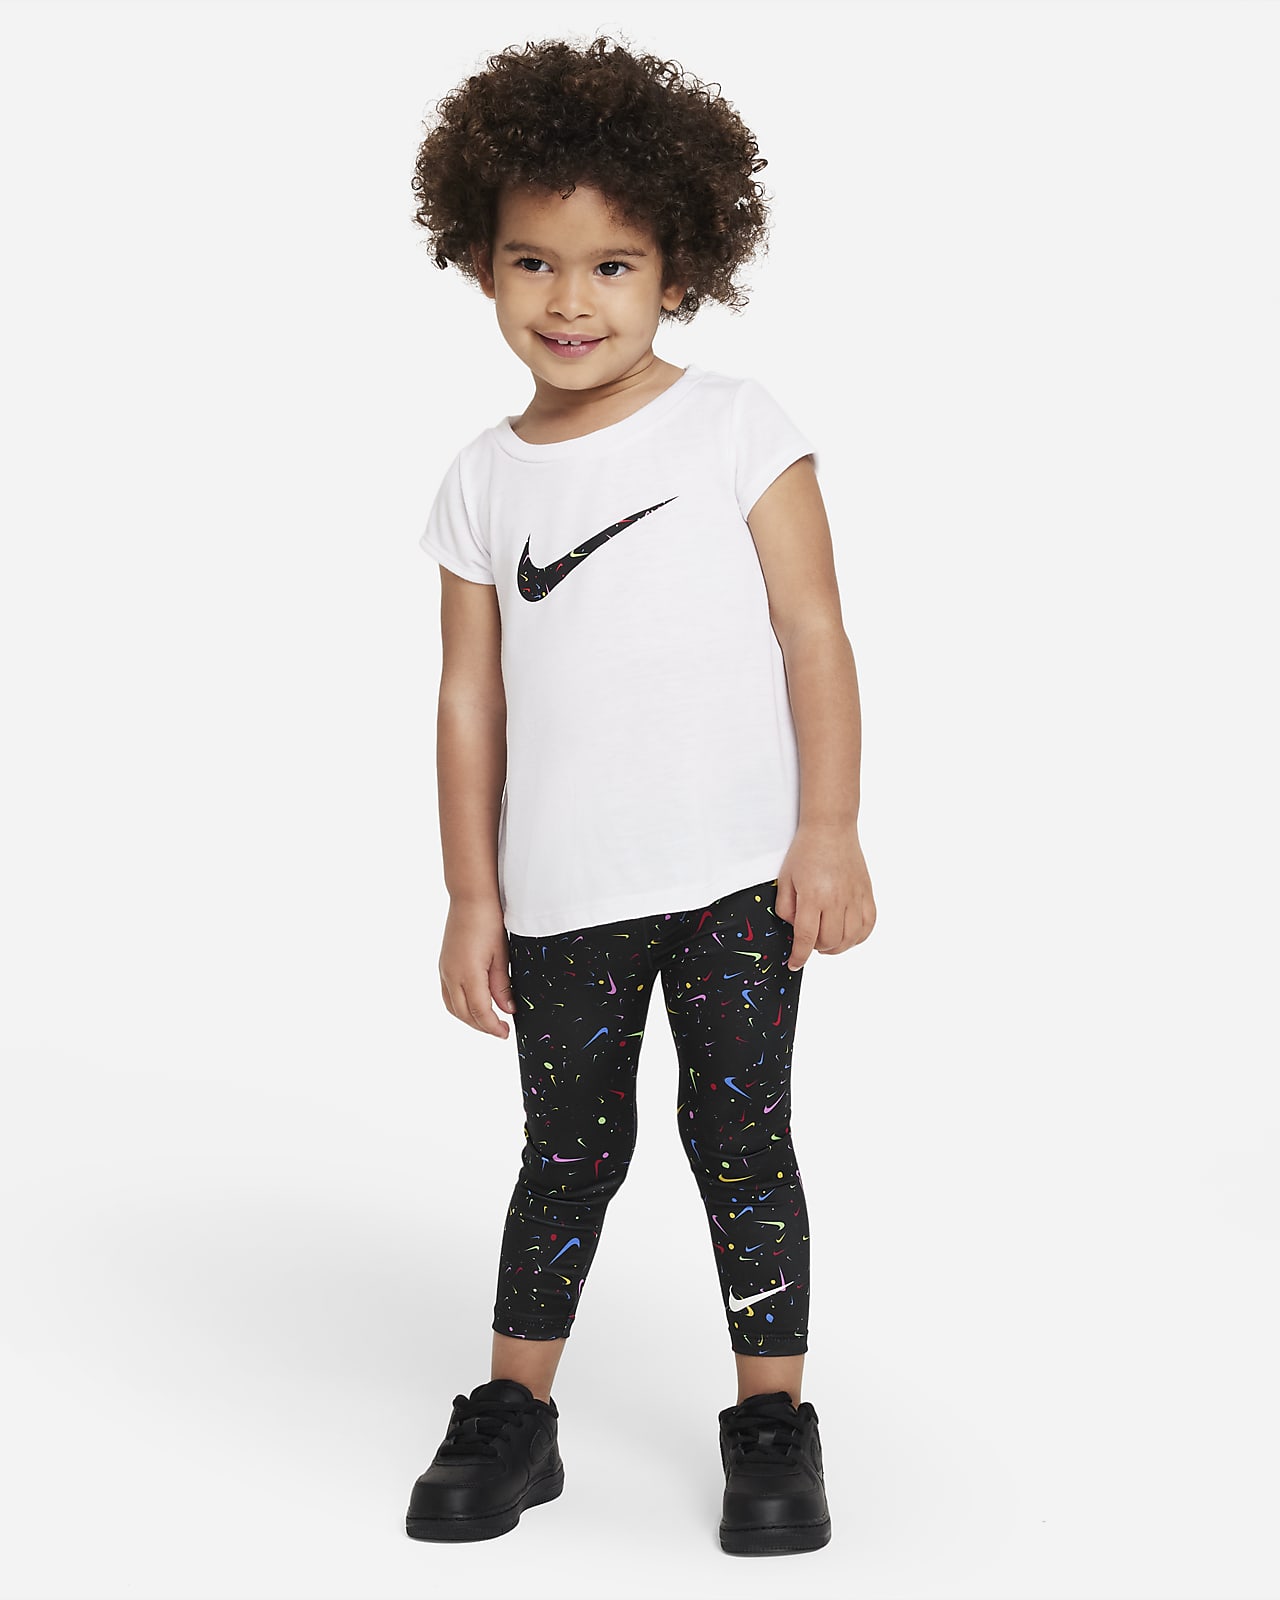 Completo t-shirt e leggings Nike - Neonati (12-24 mesi)